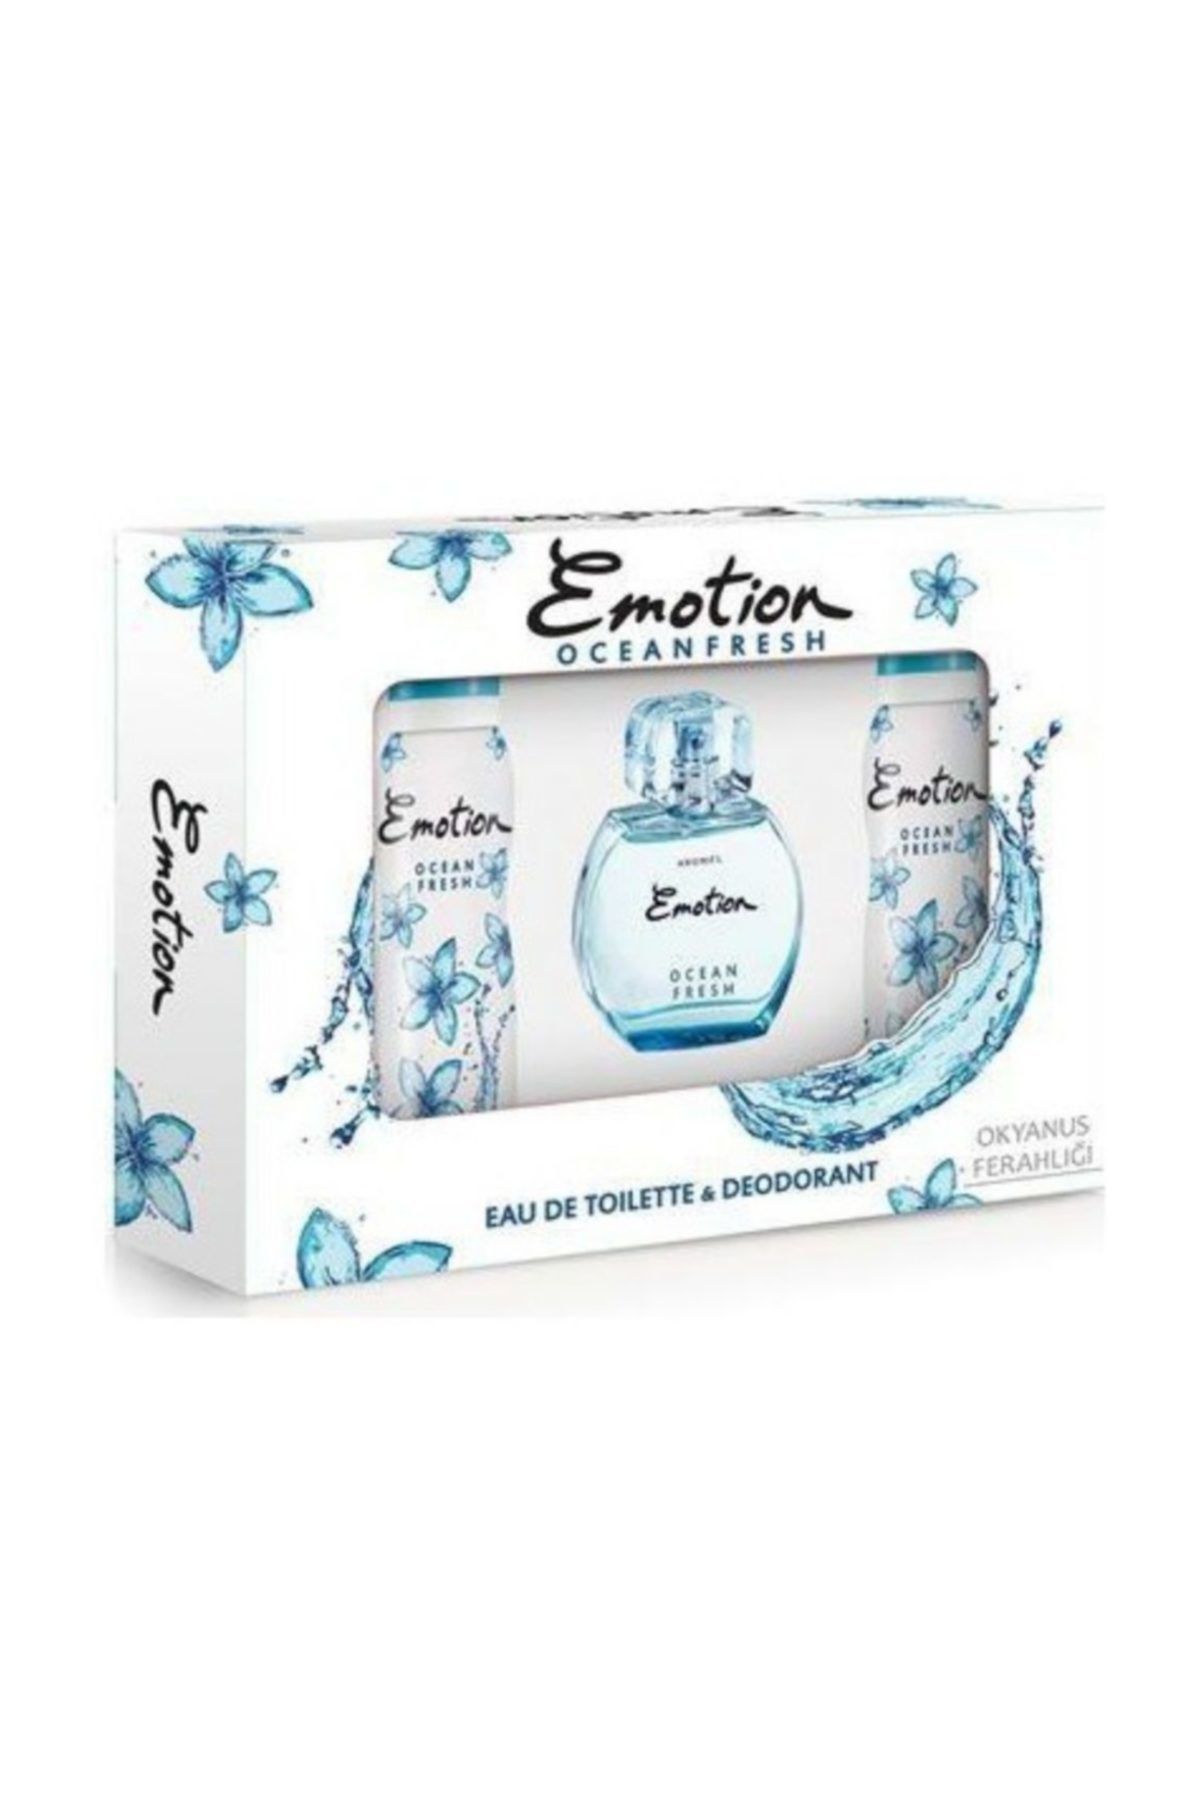 Emotion Emotıon Ocean Fres Edt 50 ml Kadın Parfüm + 2 Adet 150 ml Deodorant Set